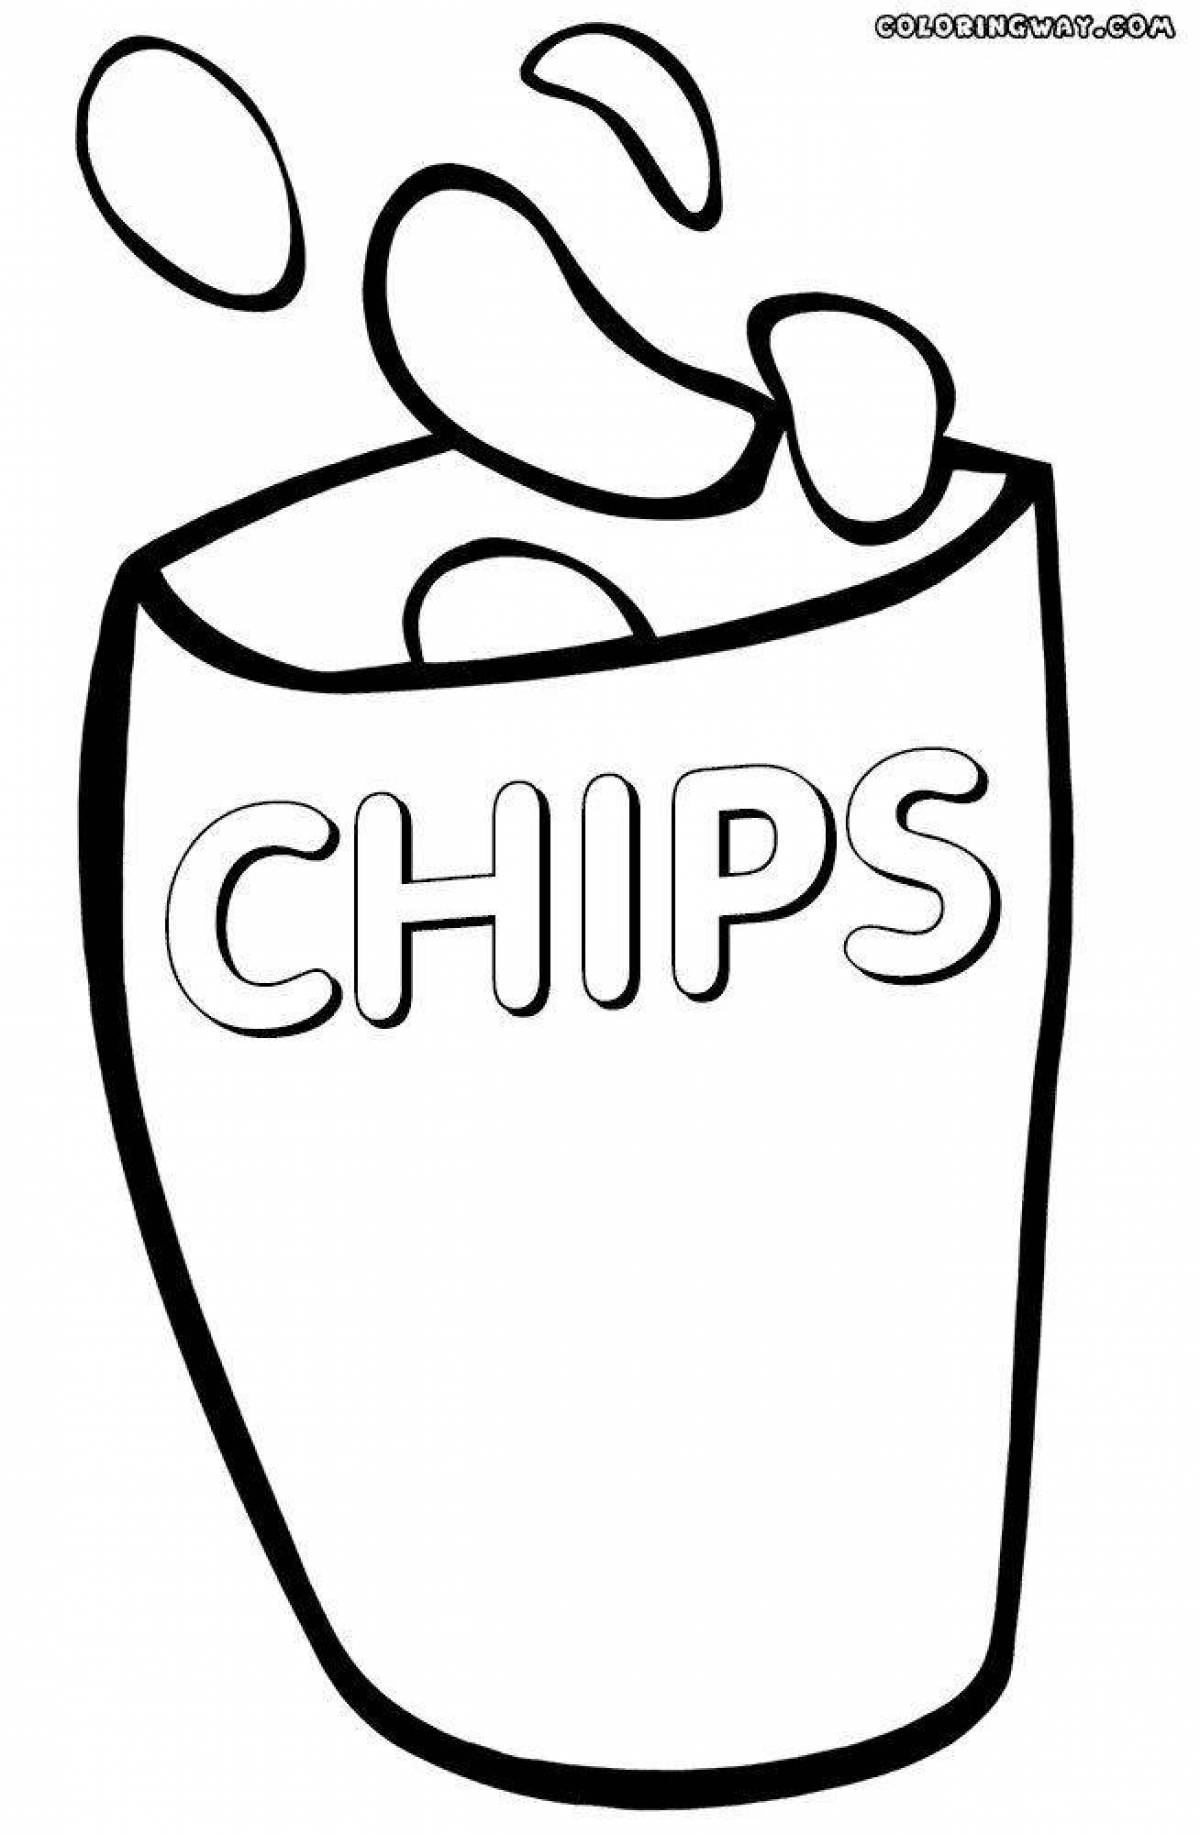 Chips раскраска